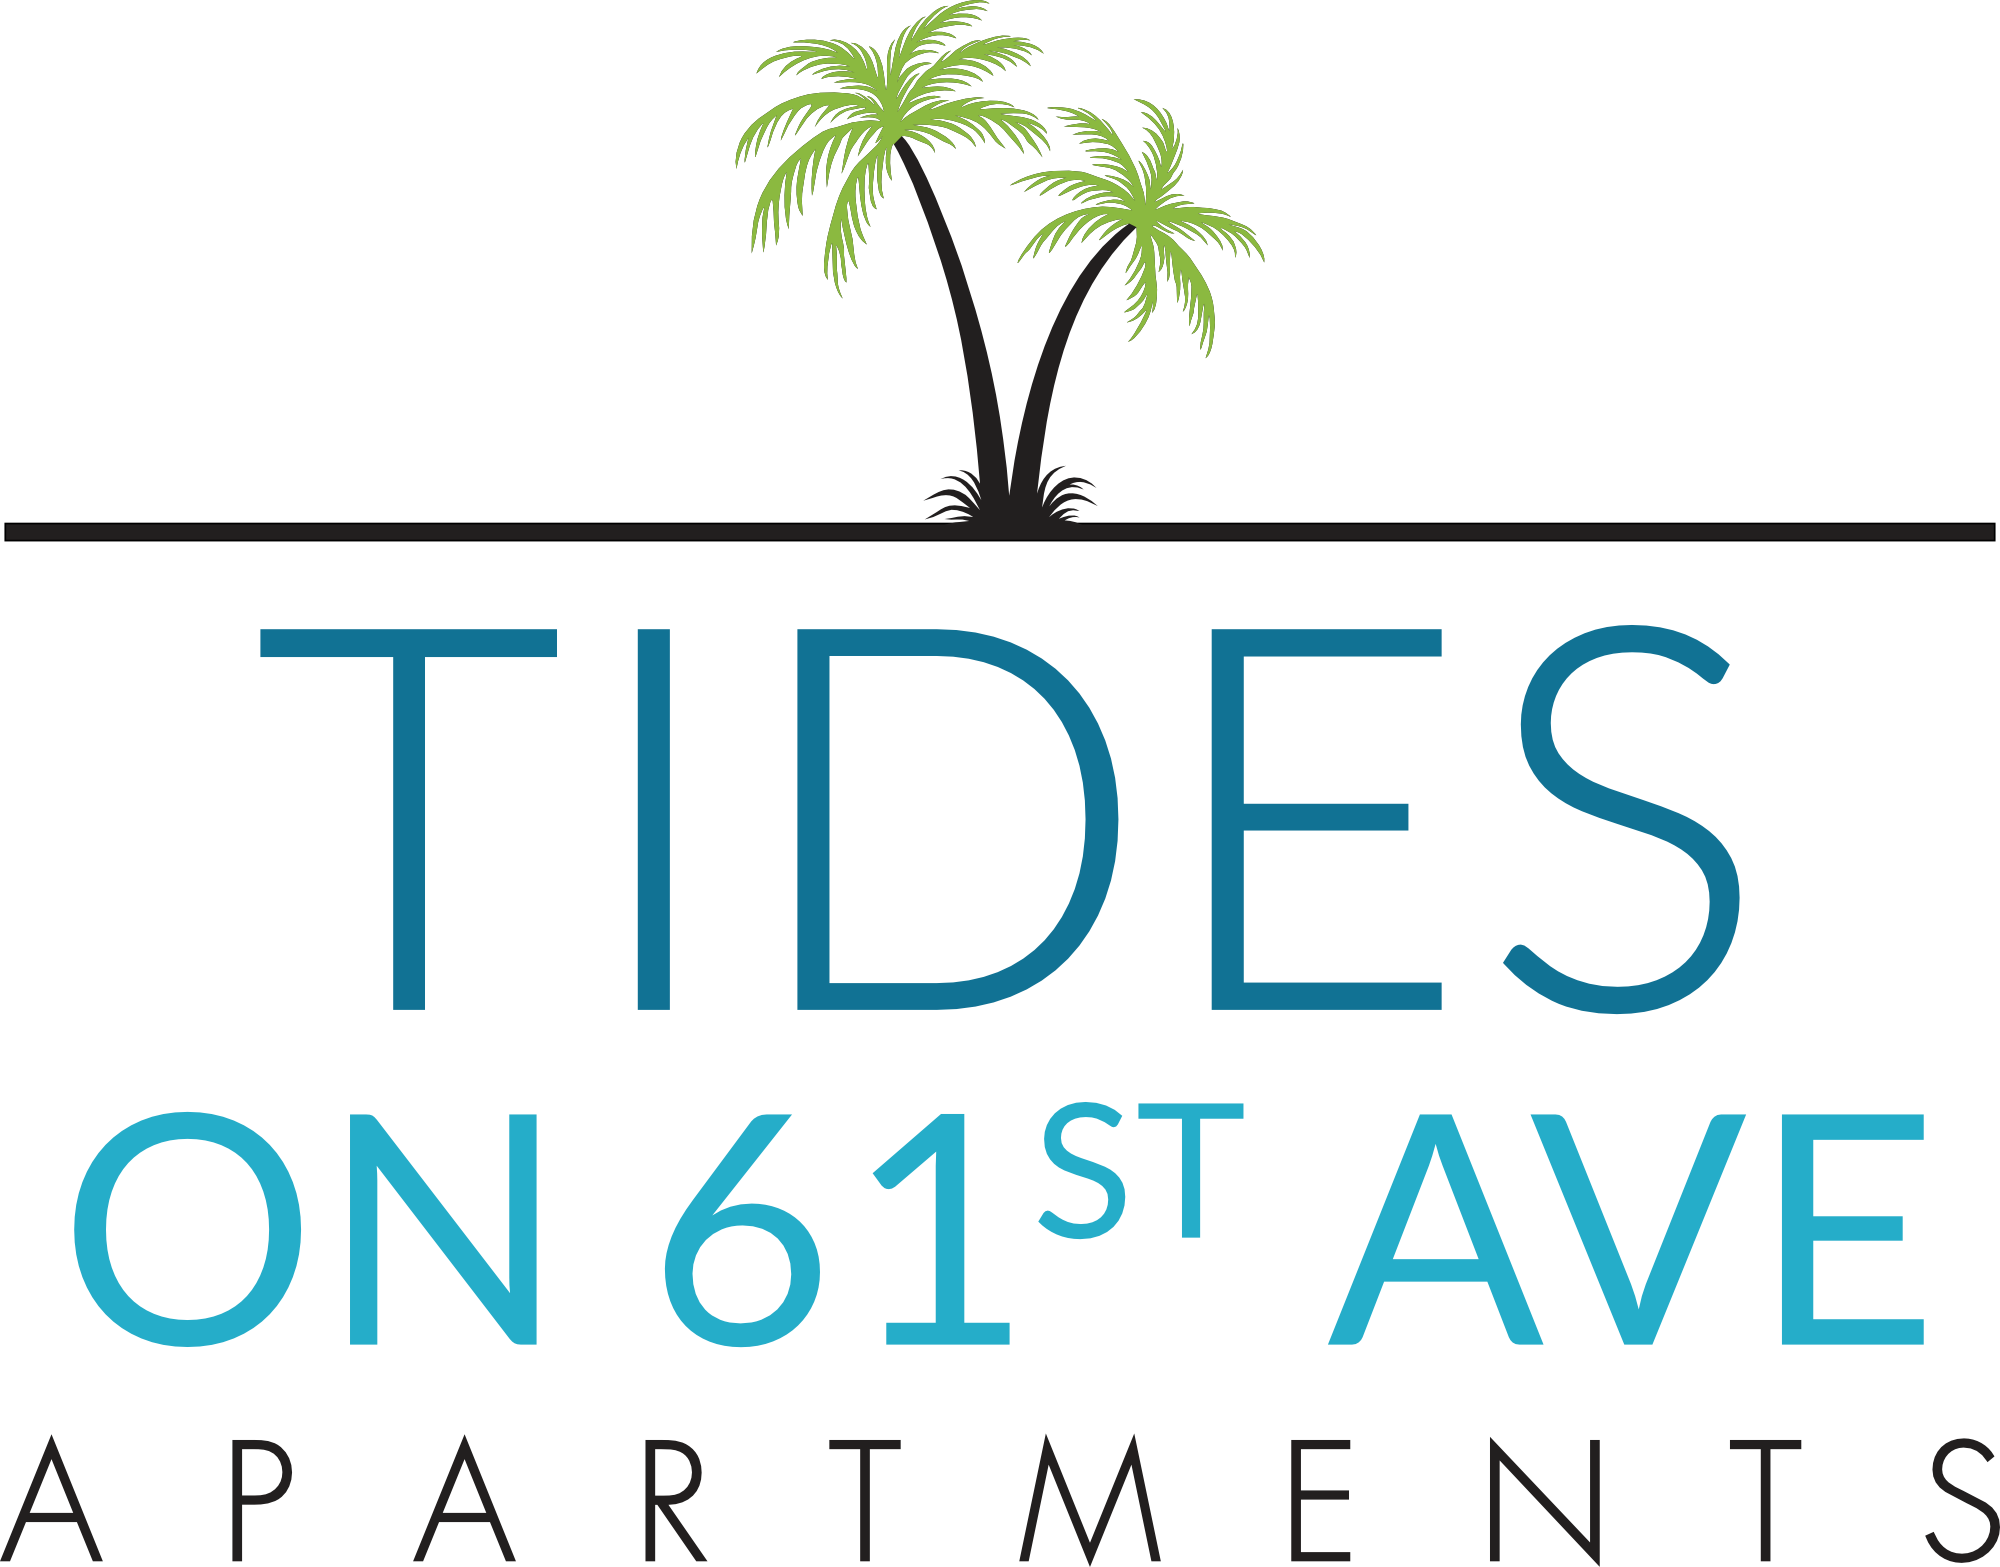 Tides on 61st Ave